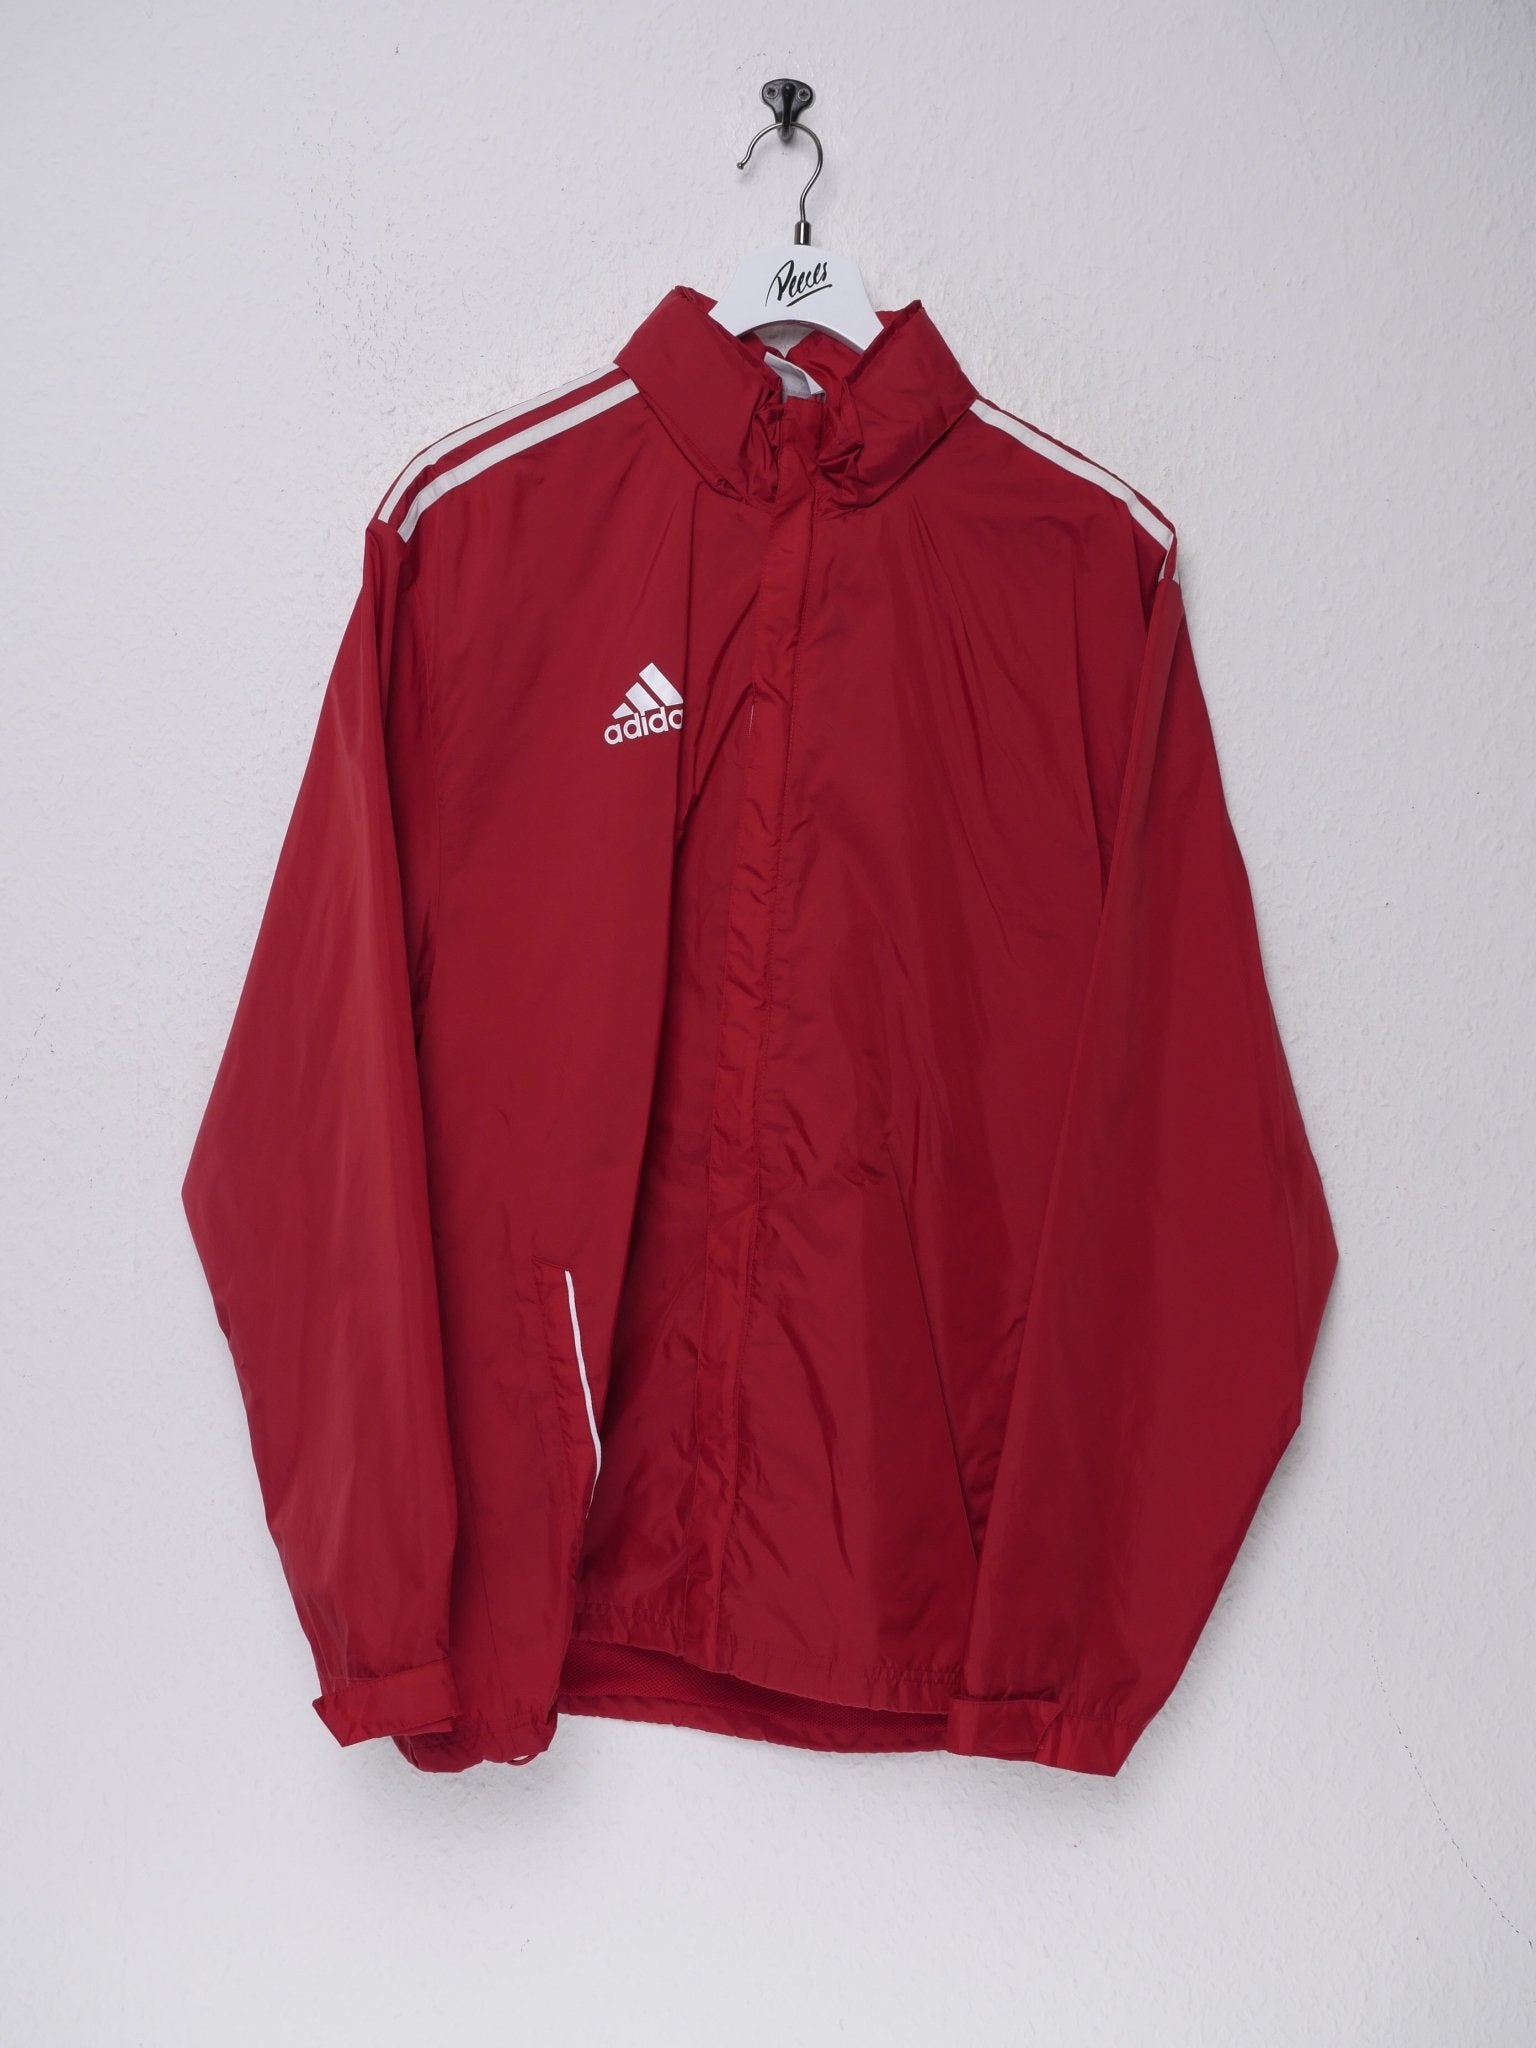 Adidas printed Logo red Track Jacket - Peeces